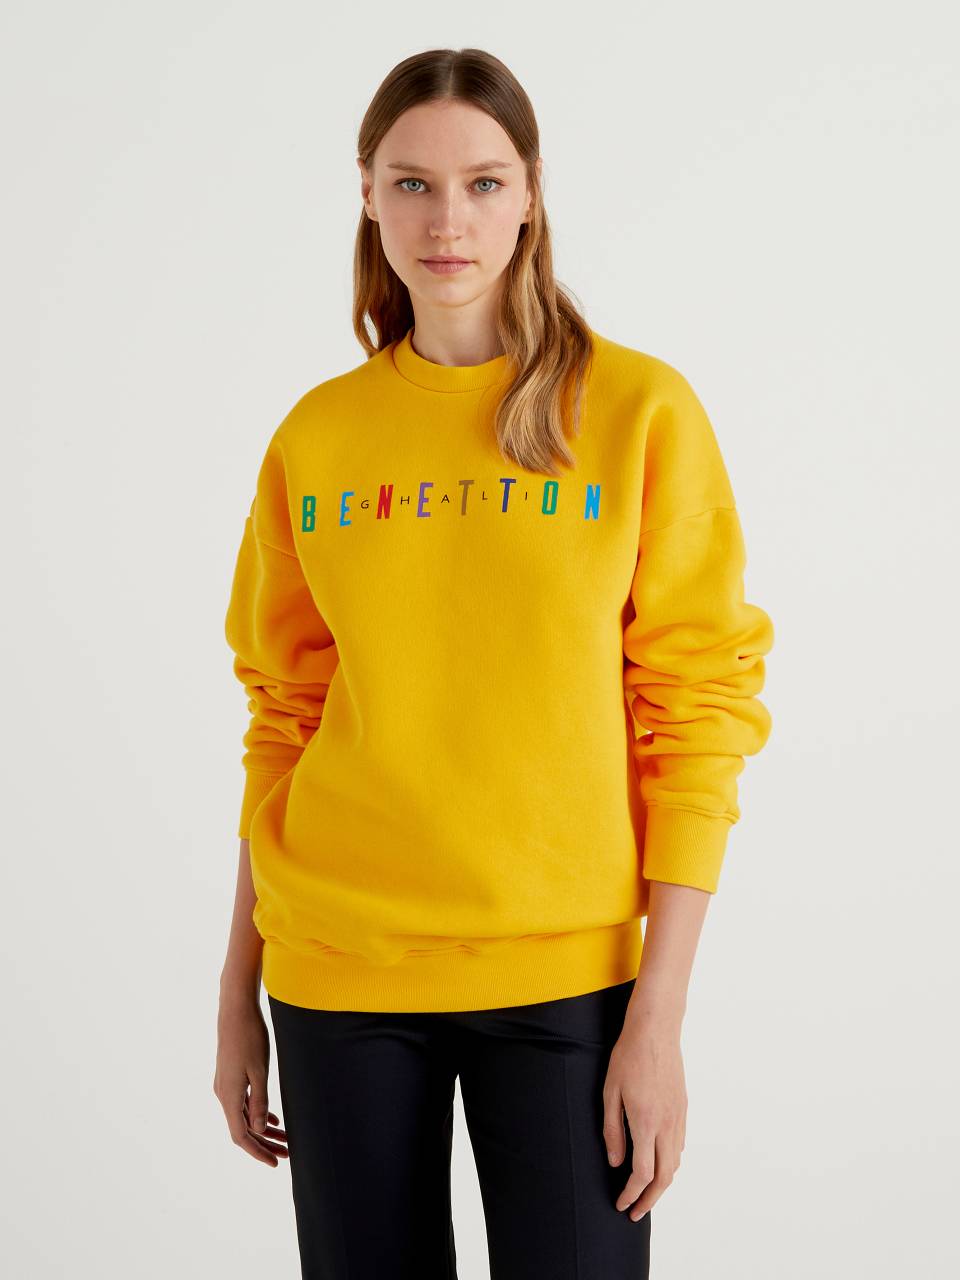 Benetton Yellow crew neck sweatshirt with print by Ghali. 1